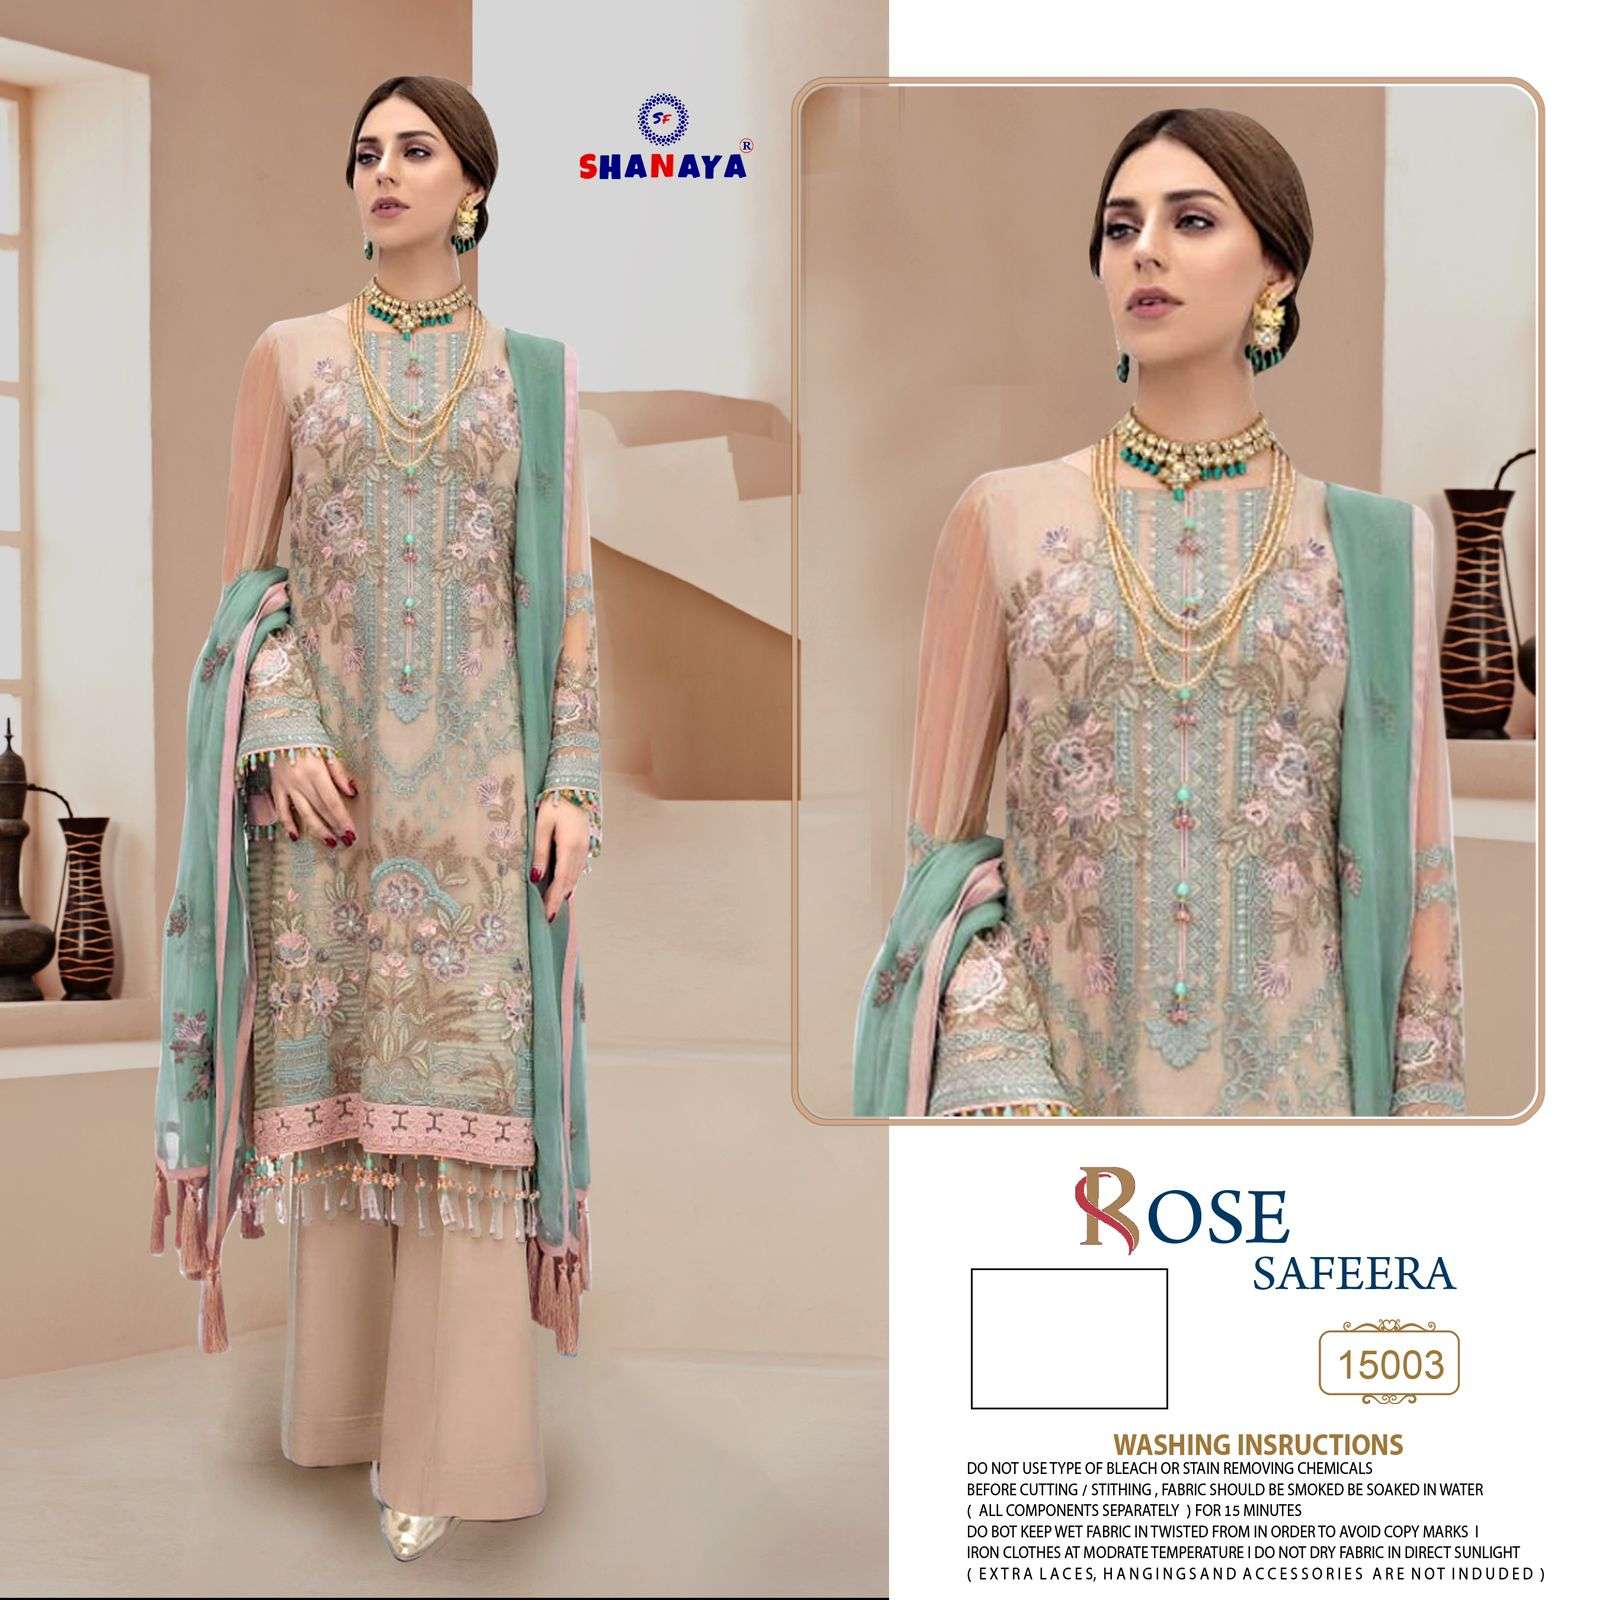 rose safeera nx by shanaya georgette pakistani dresses